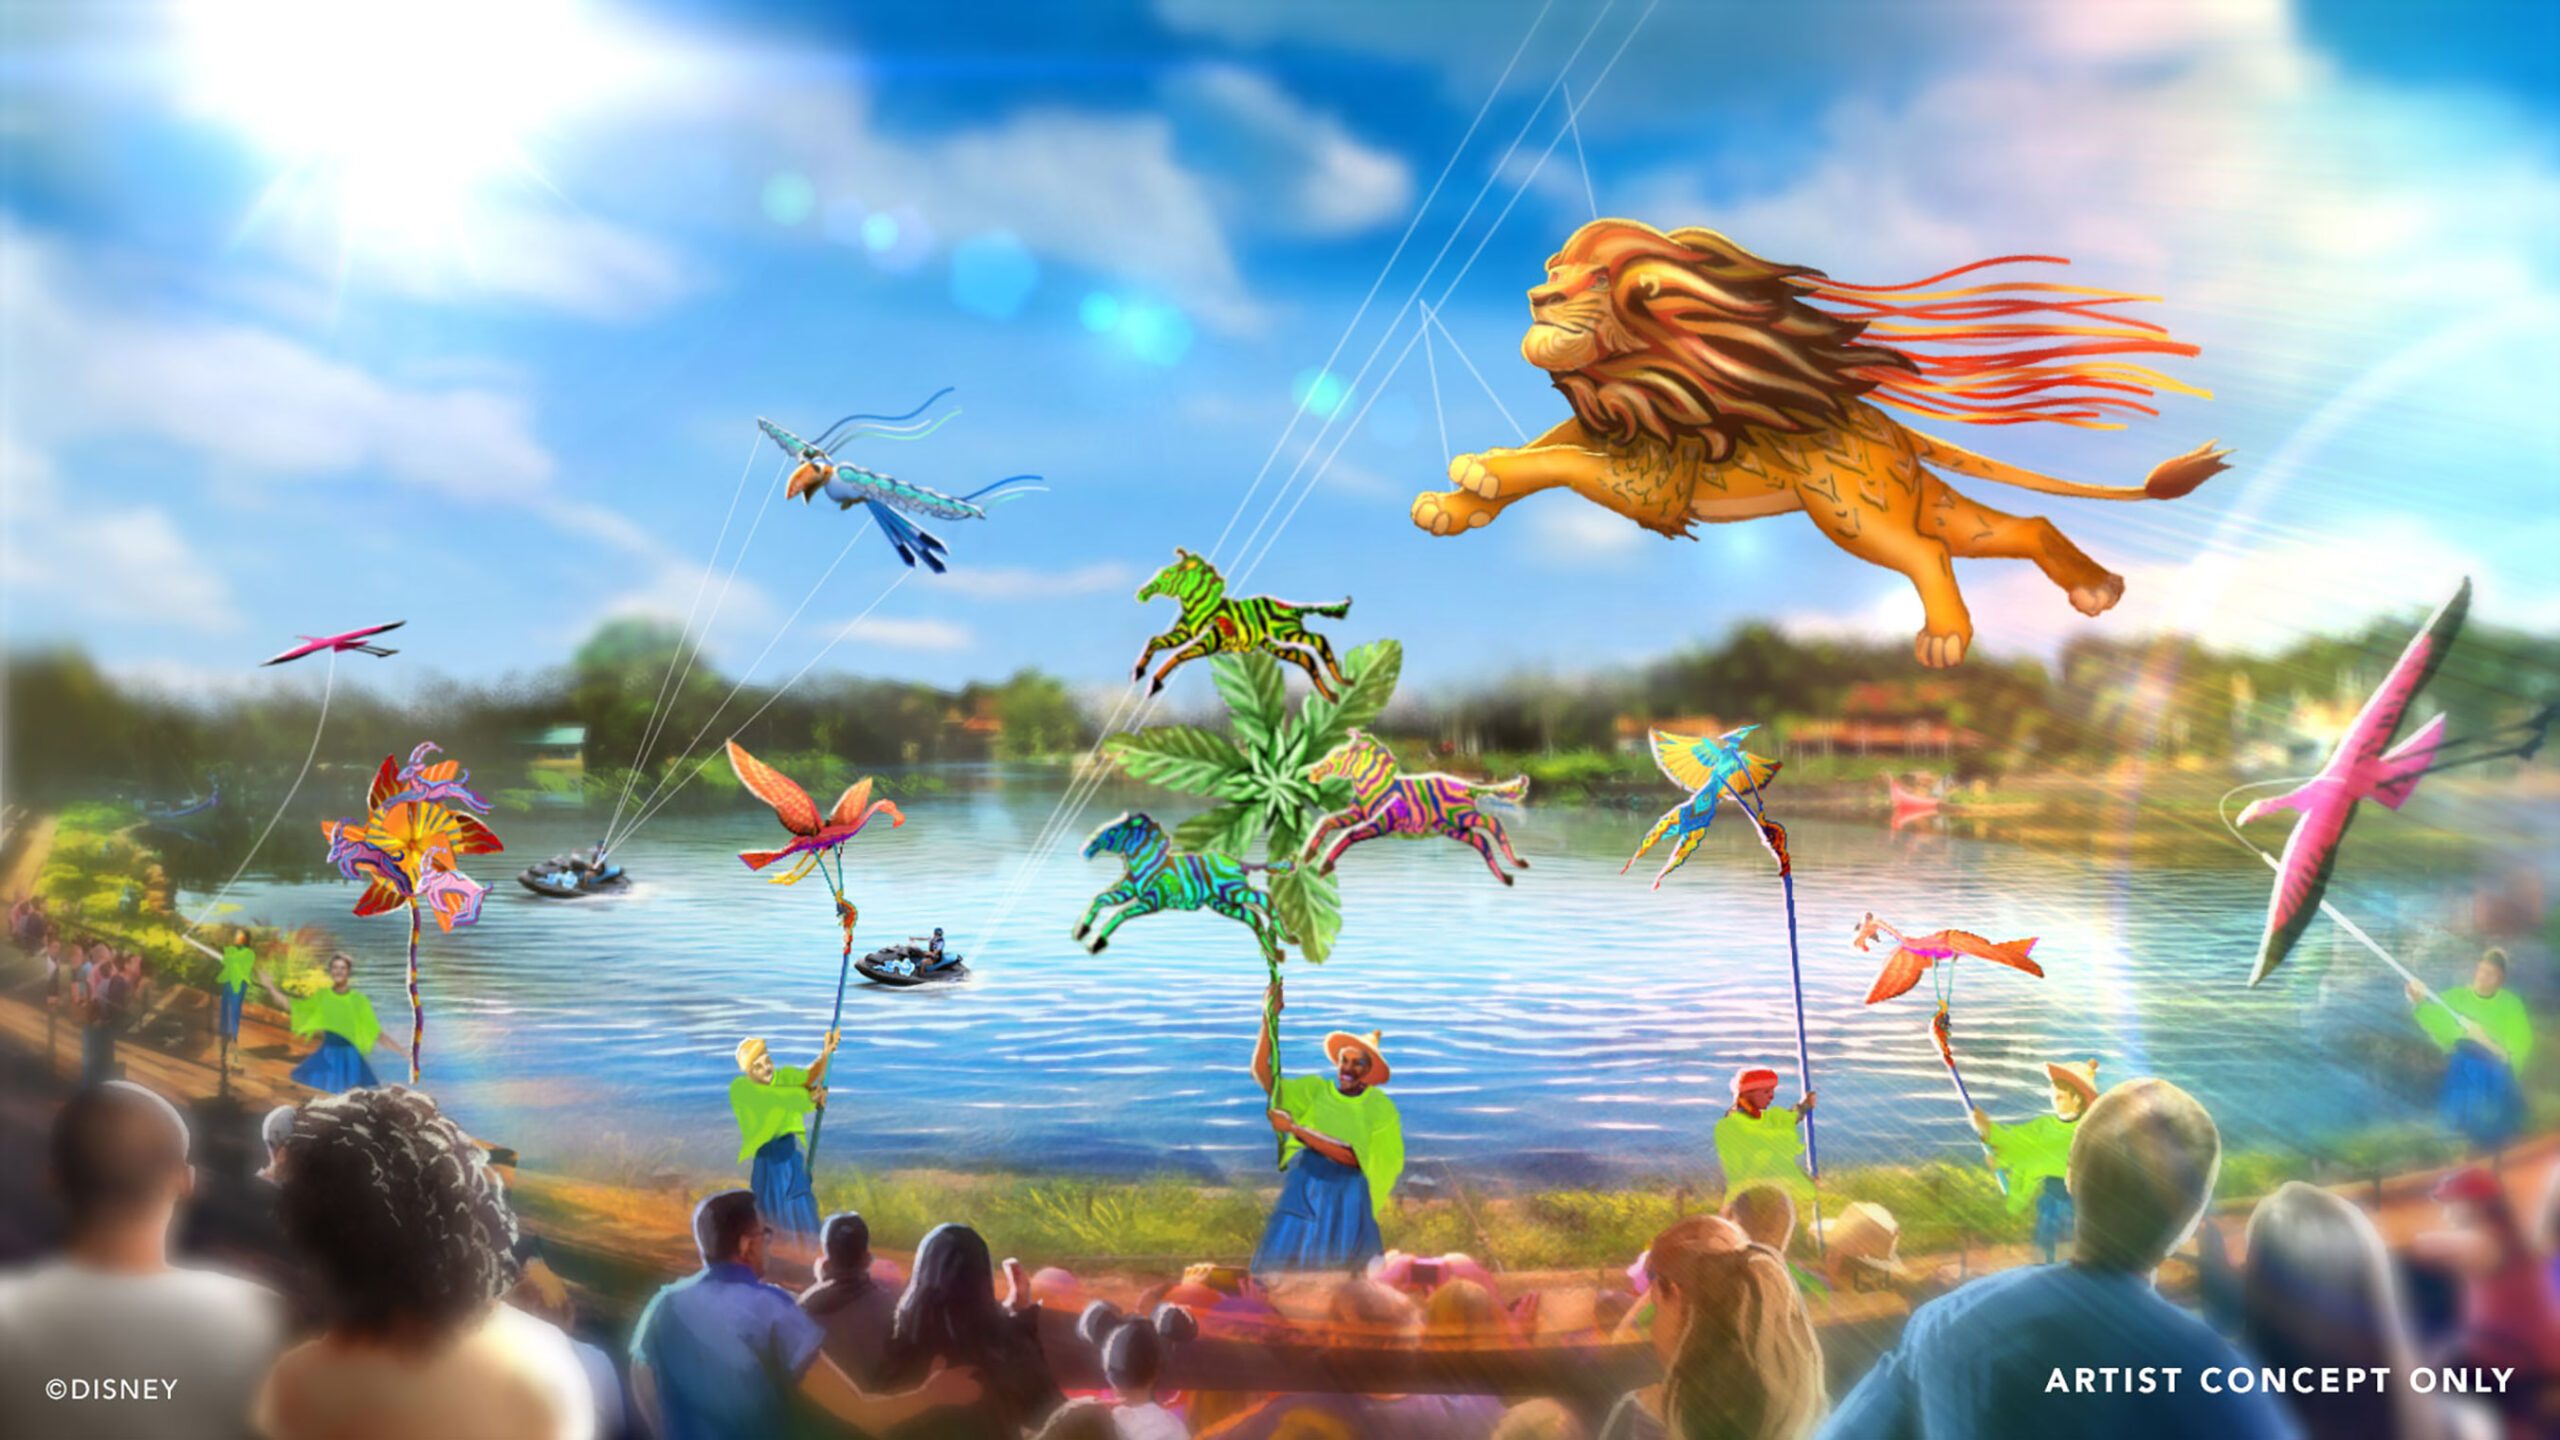 Disney KiteTails' aims to awe Animal Kingdom crowds for Disney's 50th